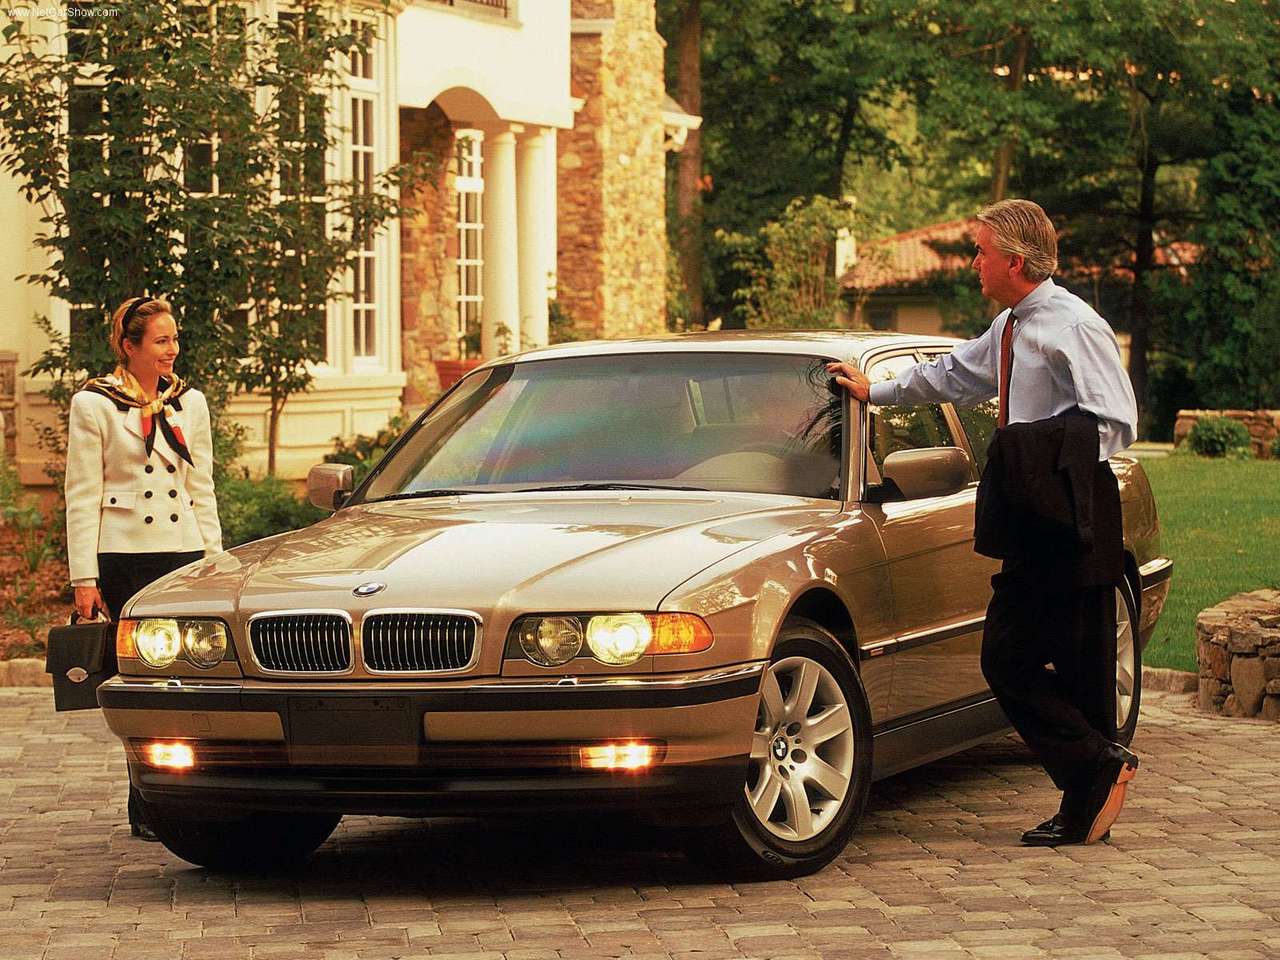 BMW, BMW E38, E38, E38 7 Series, 7 Series, Seven series, classic car, retro car, executive saloon, motoring, automotive, carandclassic, carandclassic.co.uk